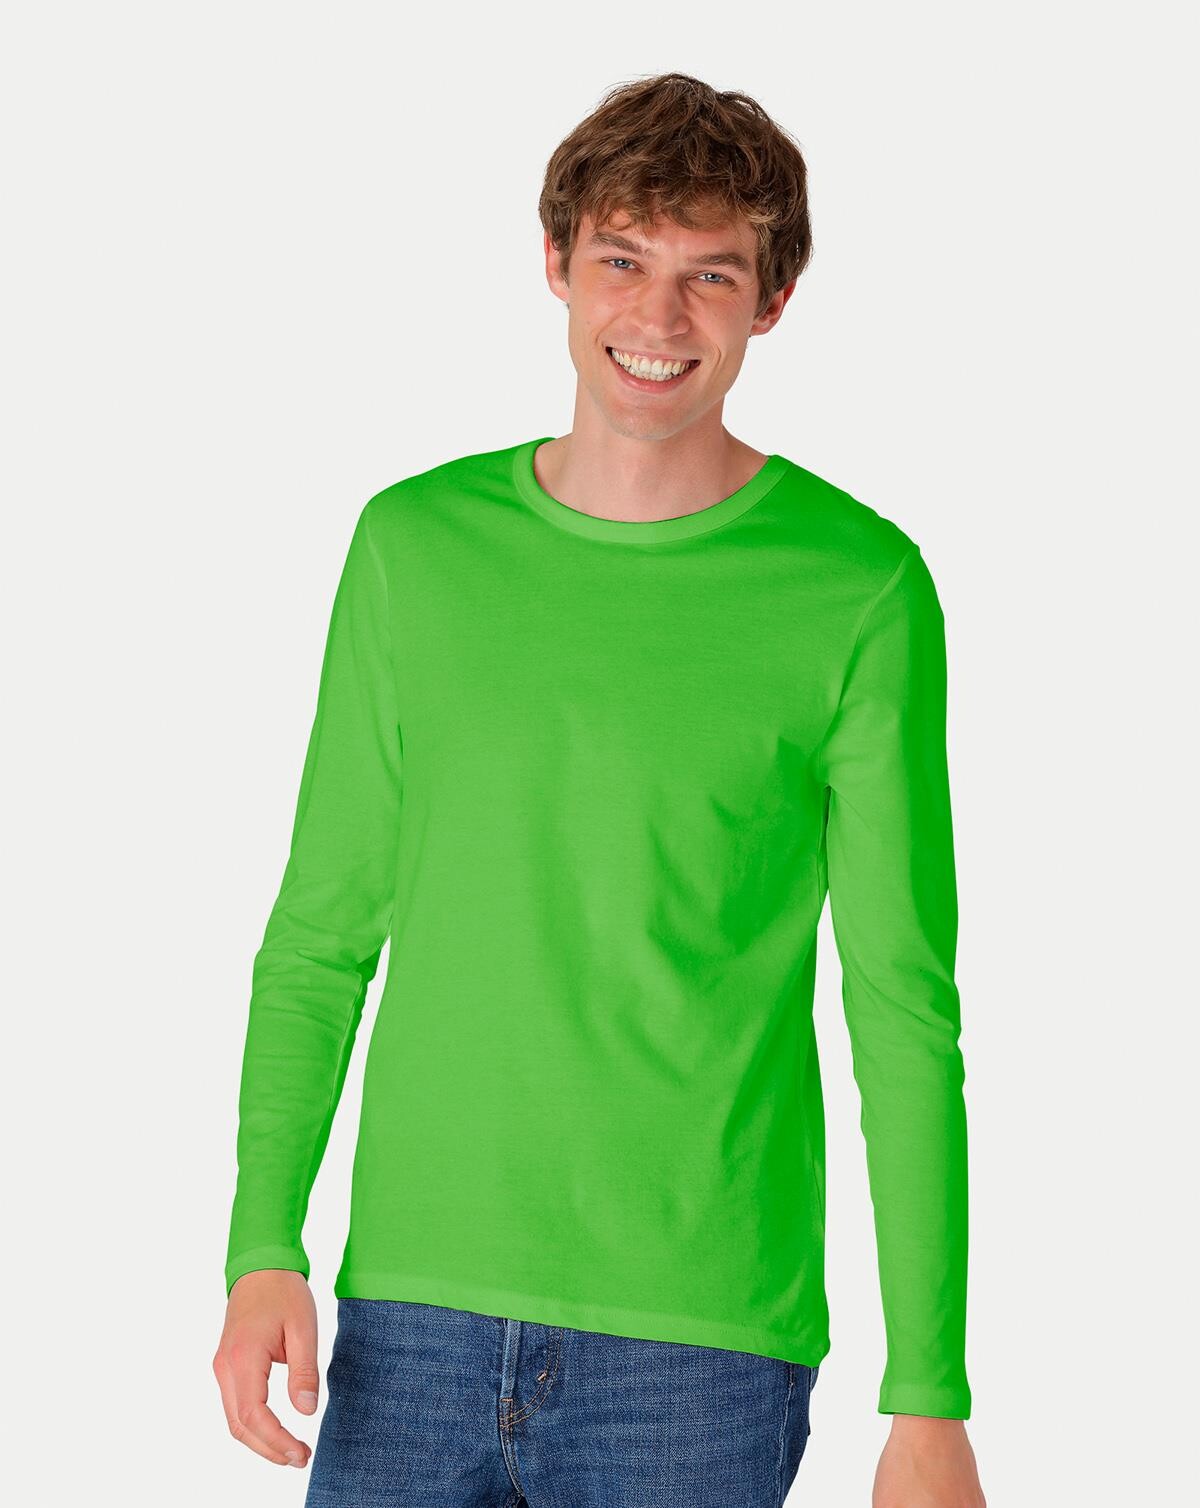 Neutral Organic - Mens Long Sleeve T-shirt (Lime, 2XL)